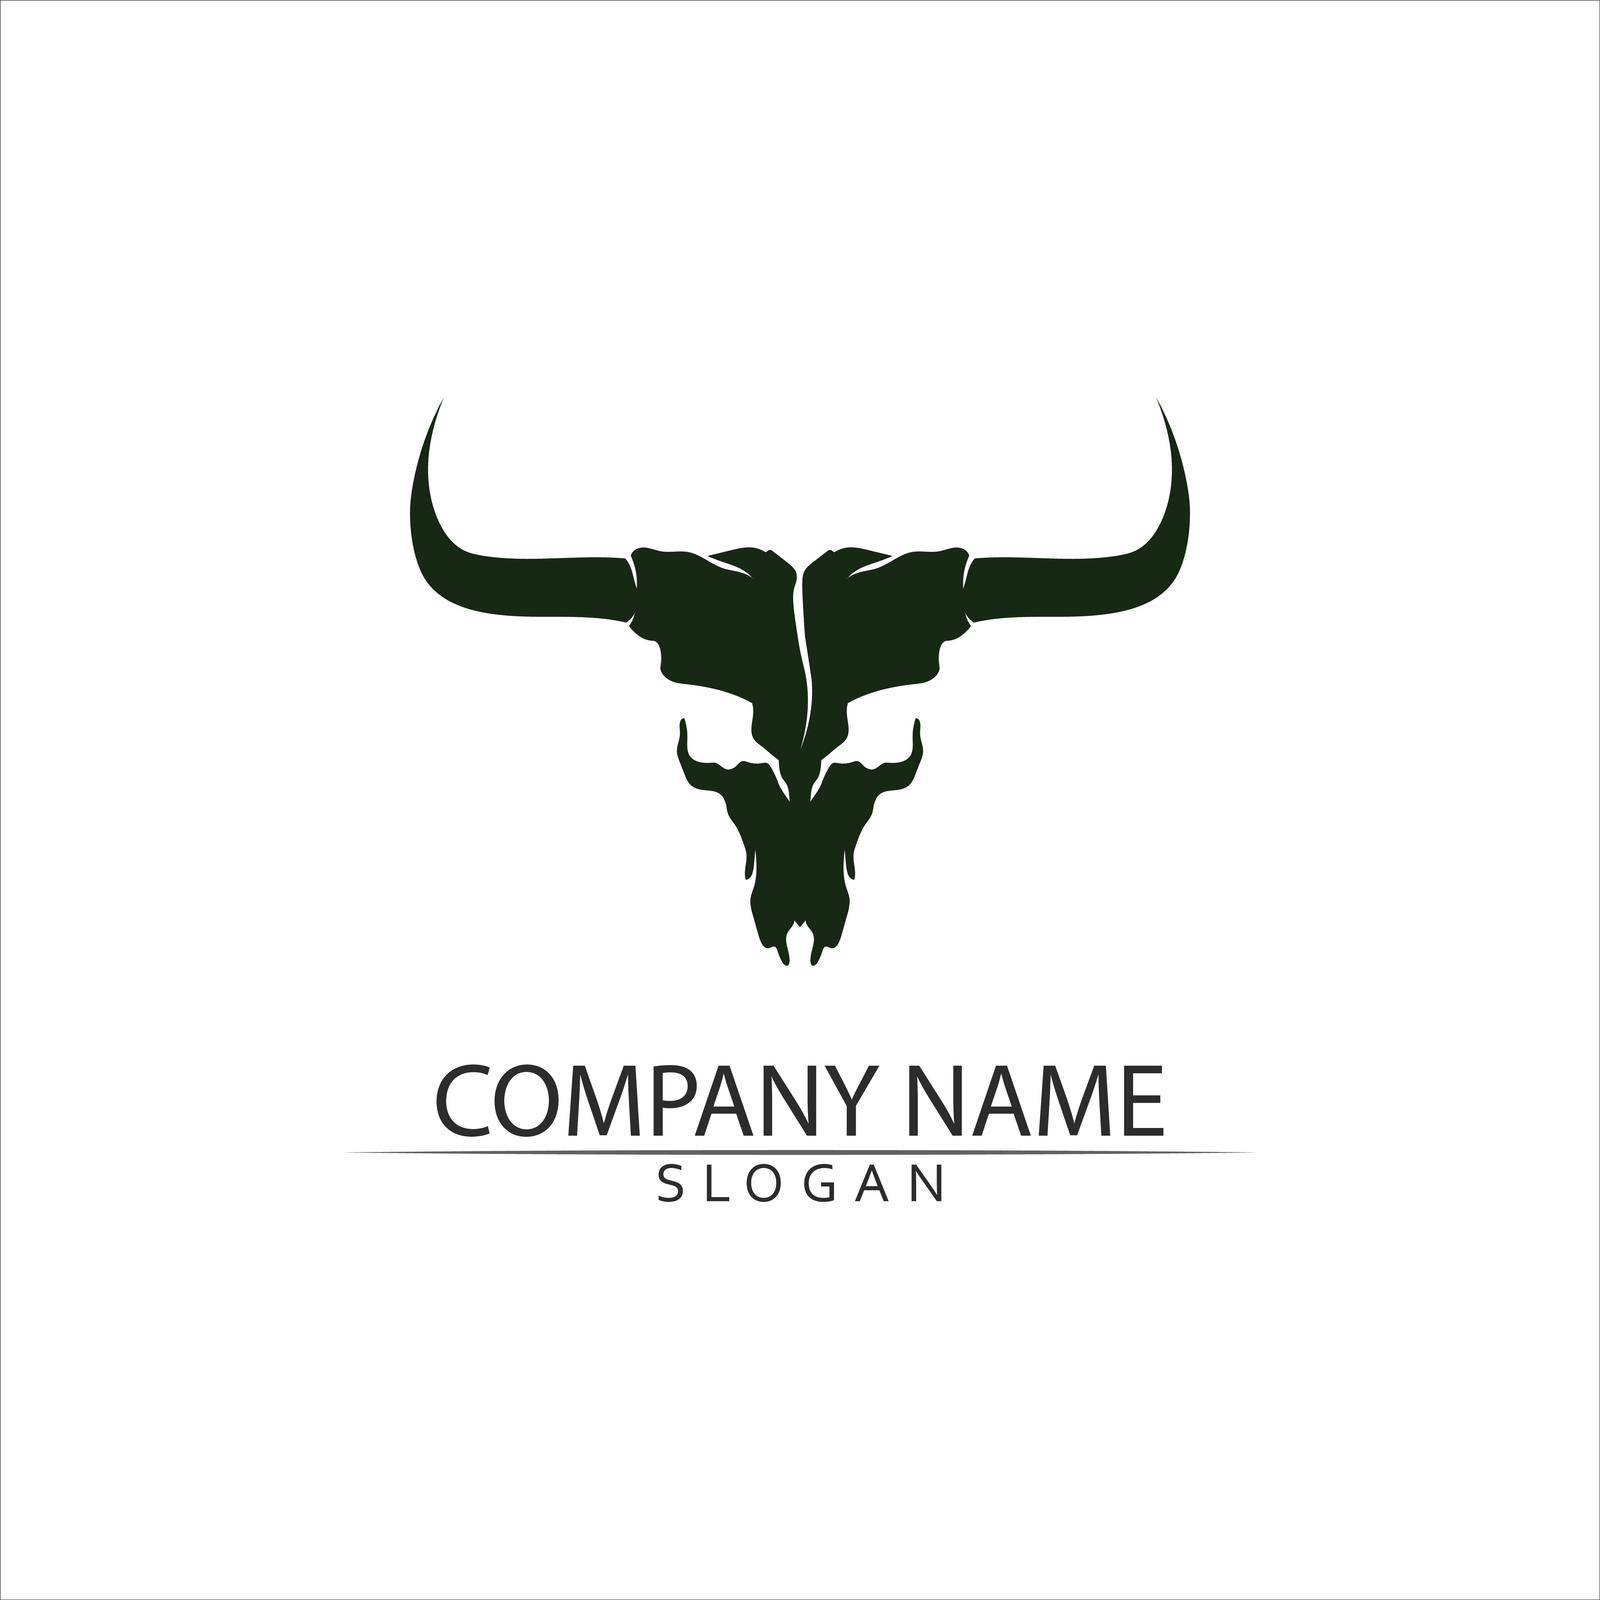 Bull horn and buffalo logo and symbols template icons app by Anggasaputro